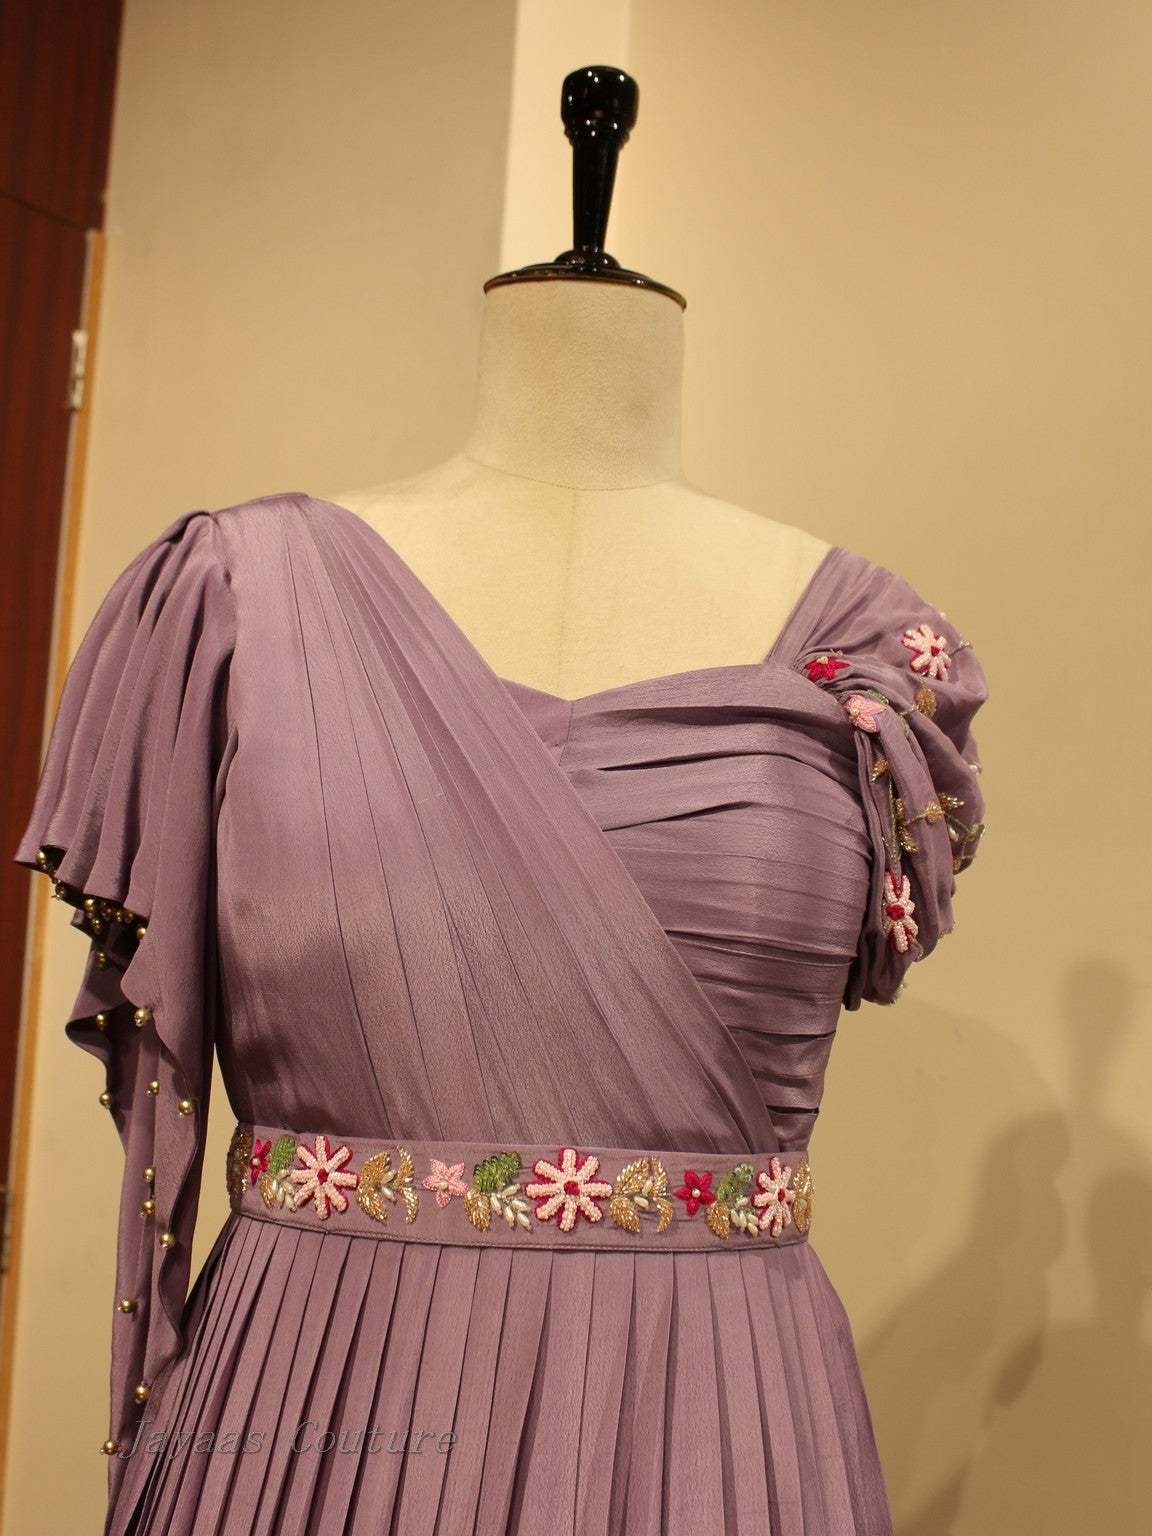 Lavander gown with belt